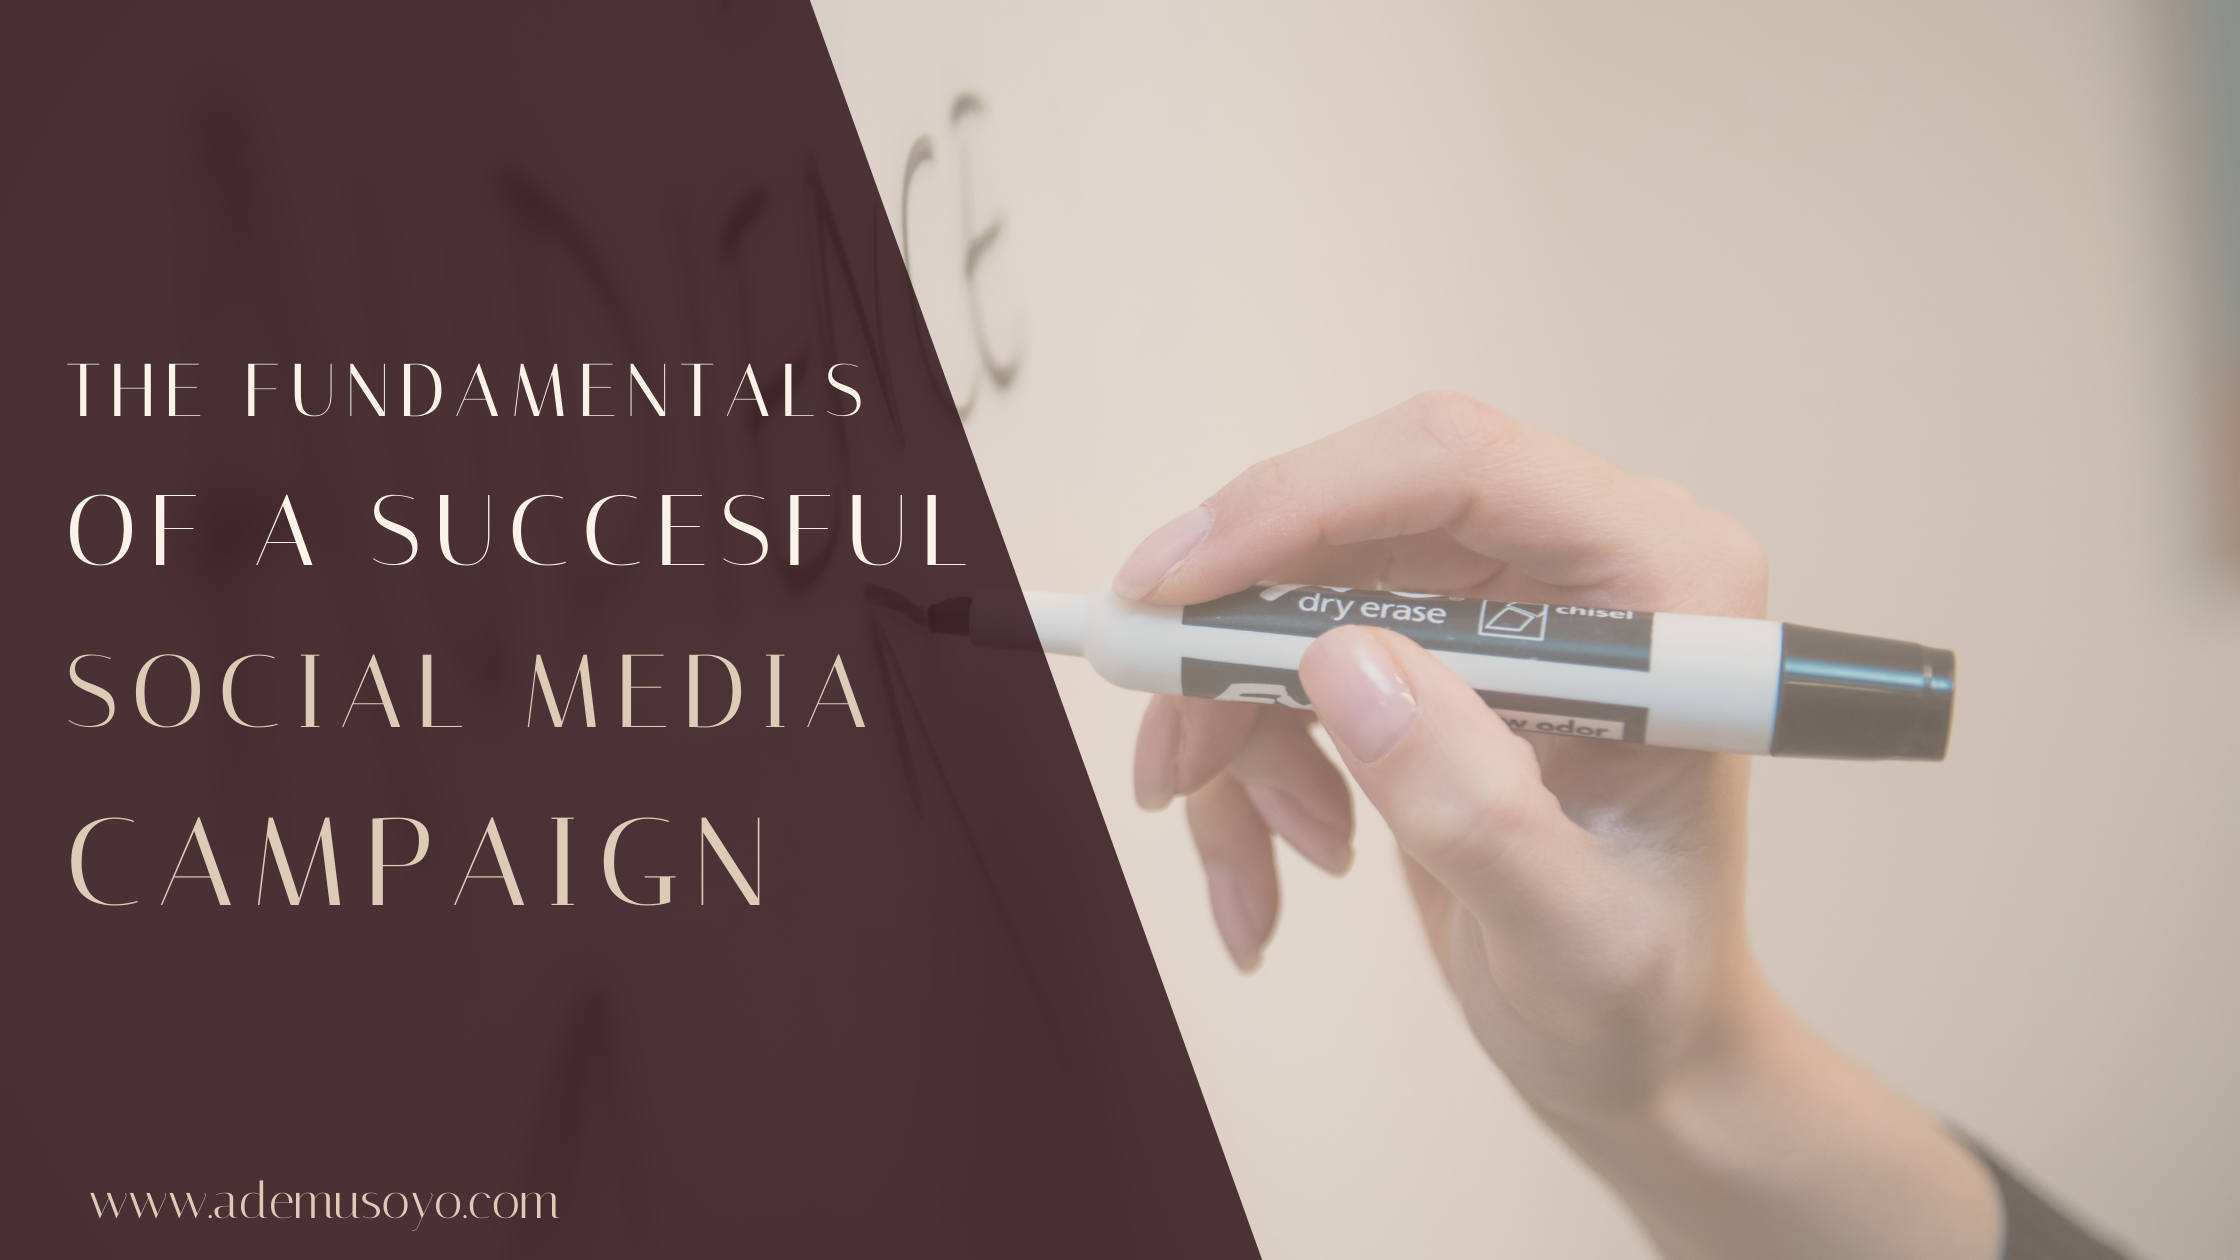 The Fundamentals of a Successful Social Media Campaign